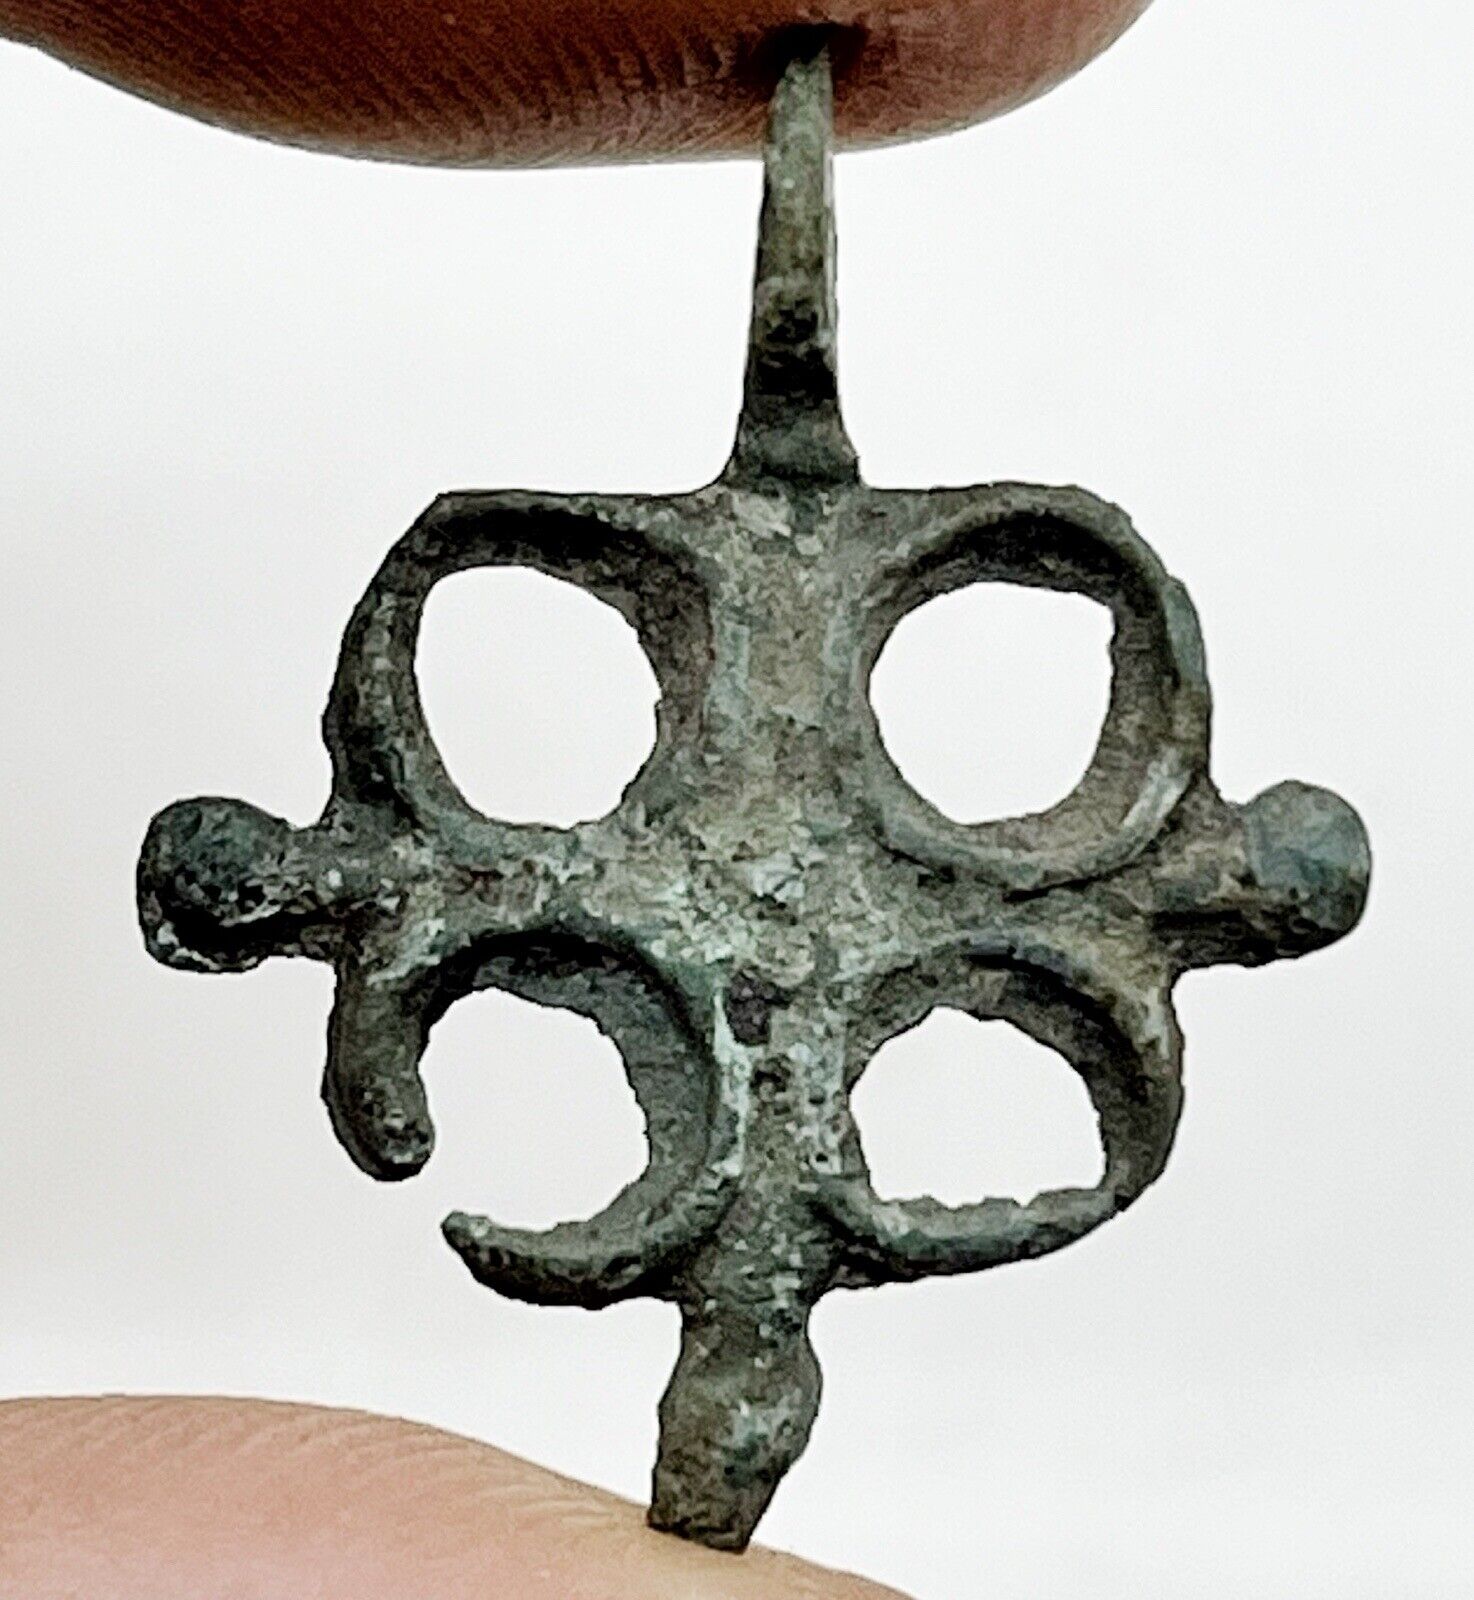 RARE Authentic Medieval Crusader Bronze Cross Artifact : Circa 1095-1492 AD = )